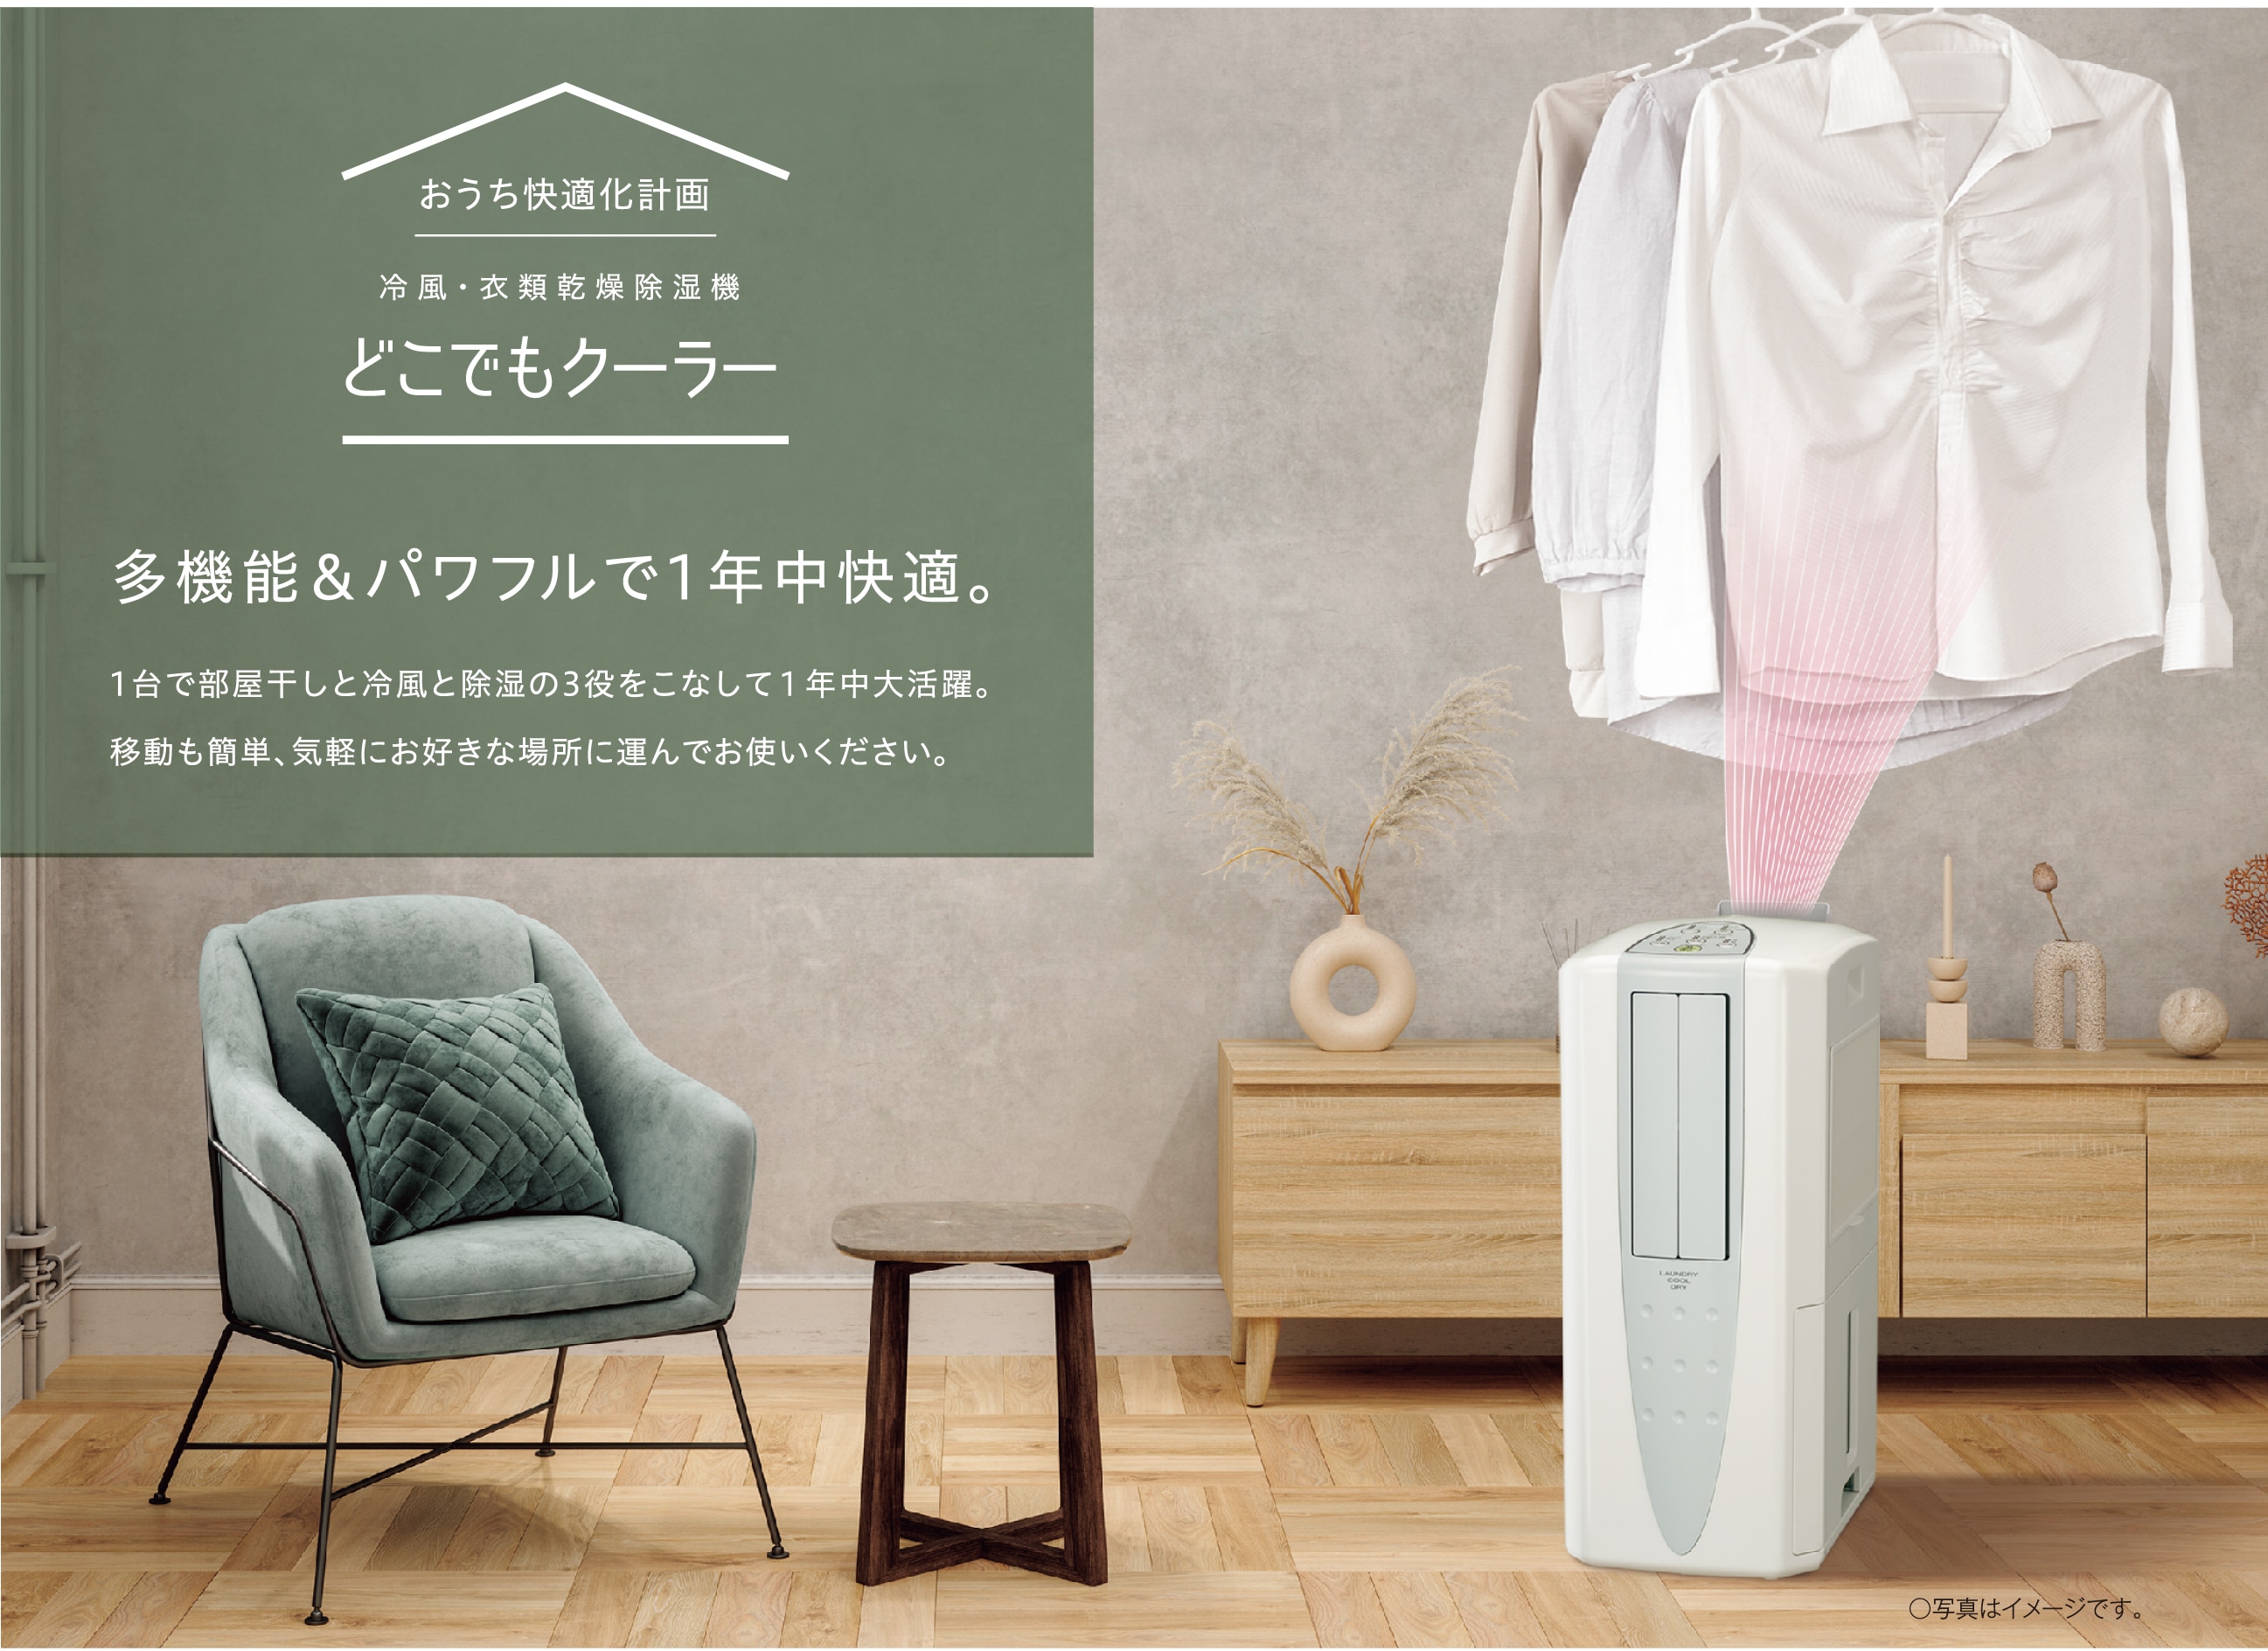 CORONA 冷風・衣類乾燥除湿機 CDM-F1019 2019年製【モノ市場 知立店 